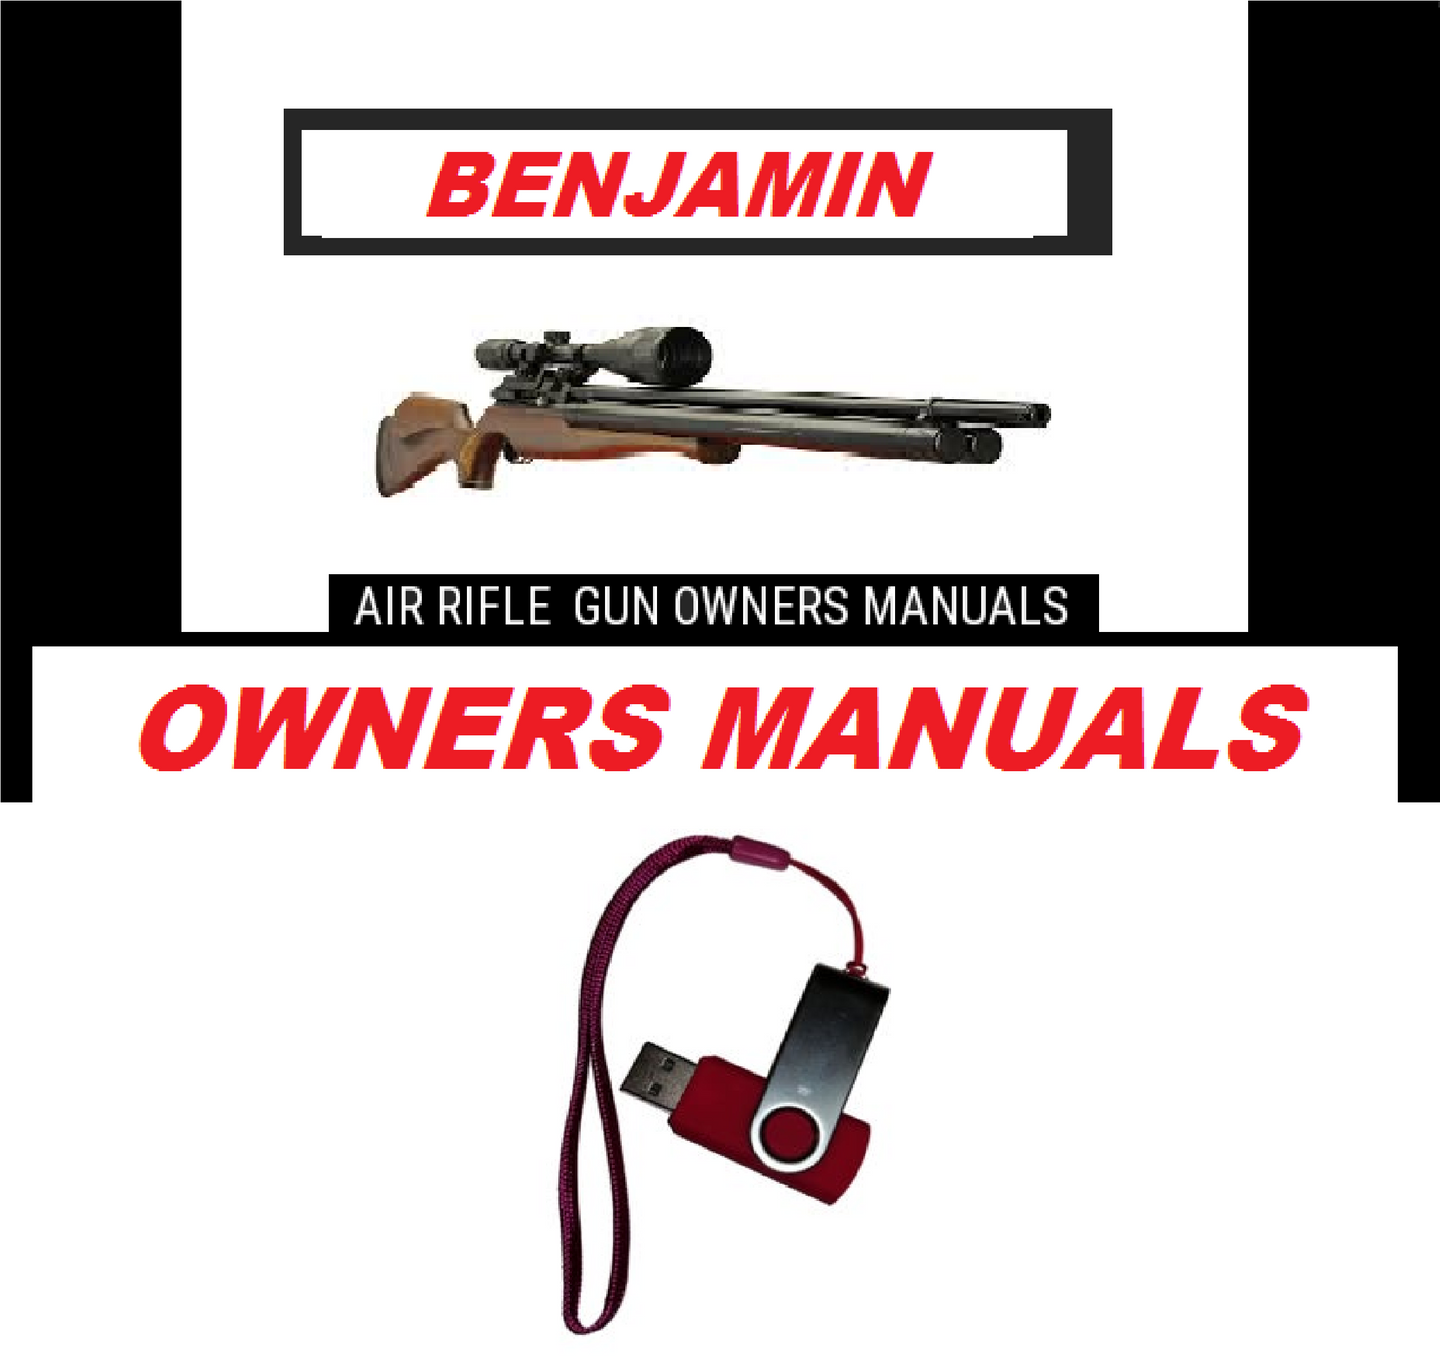 Benjamin Airgun Air Rifle Gun Pistol Owners Manuals Firearms Weapons Complete Set